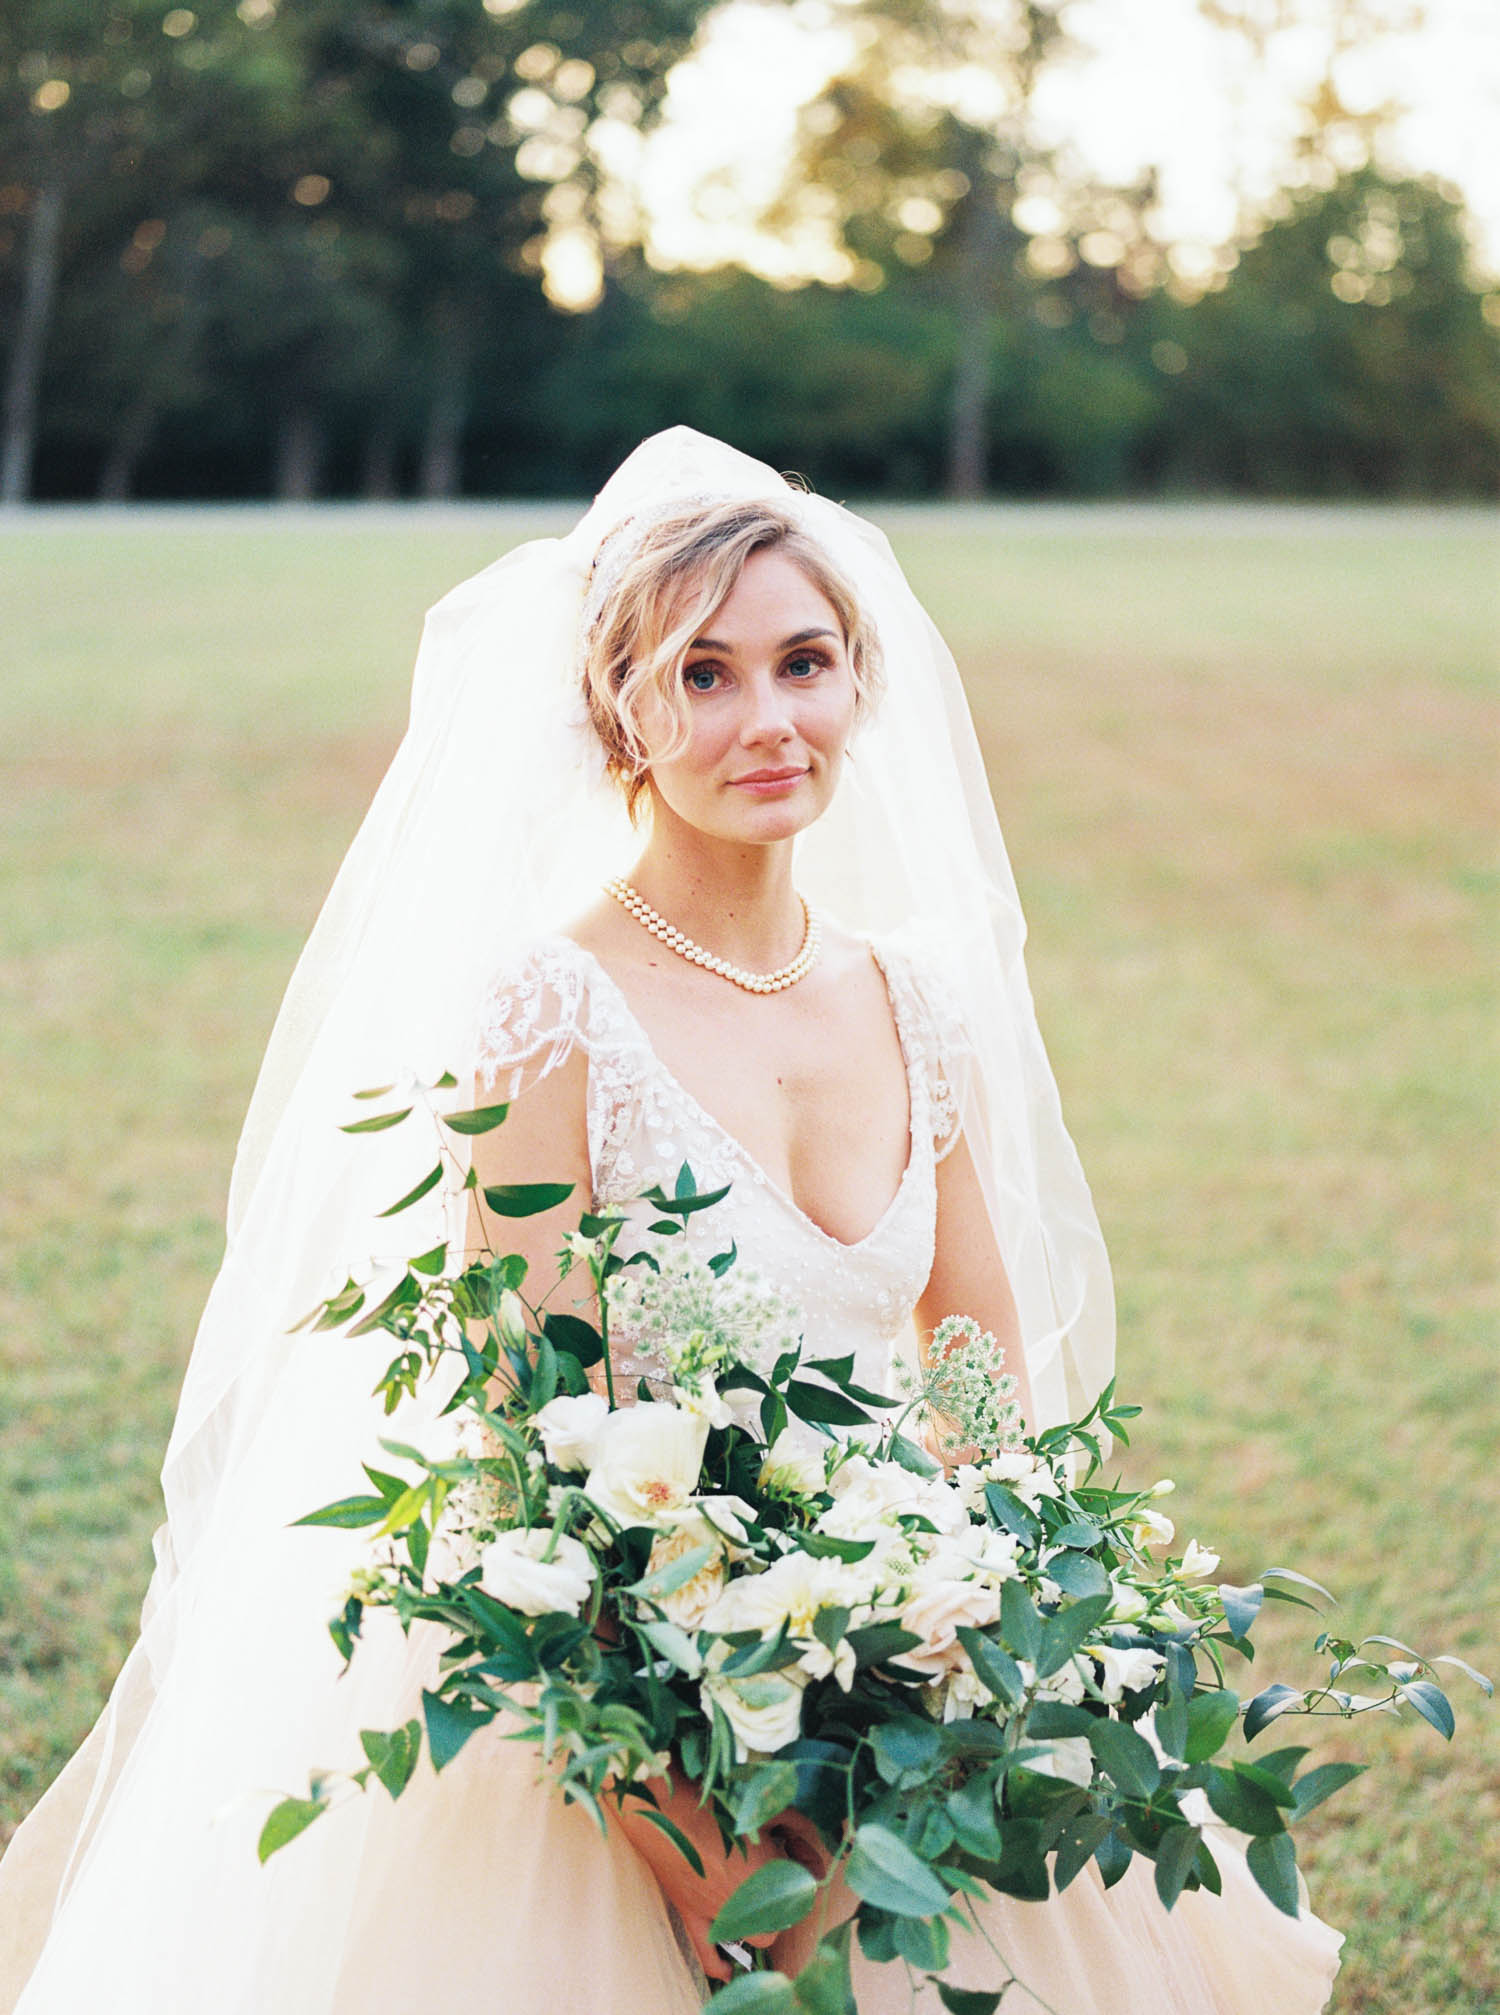 Blush wedding dress with asymmetrical, trailing floral design in Nashville, TN.